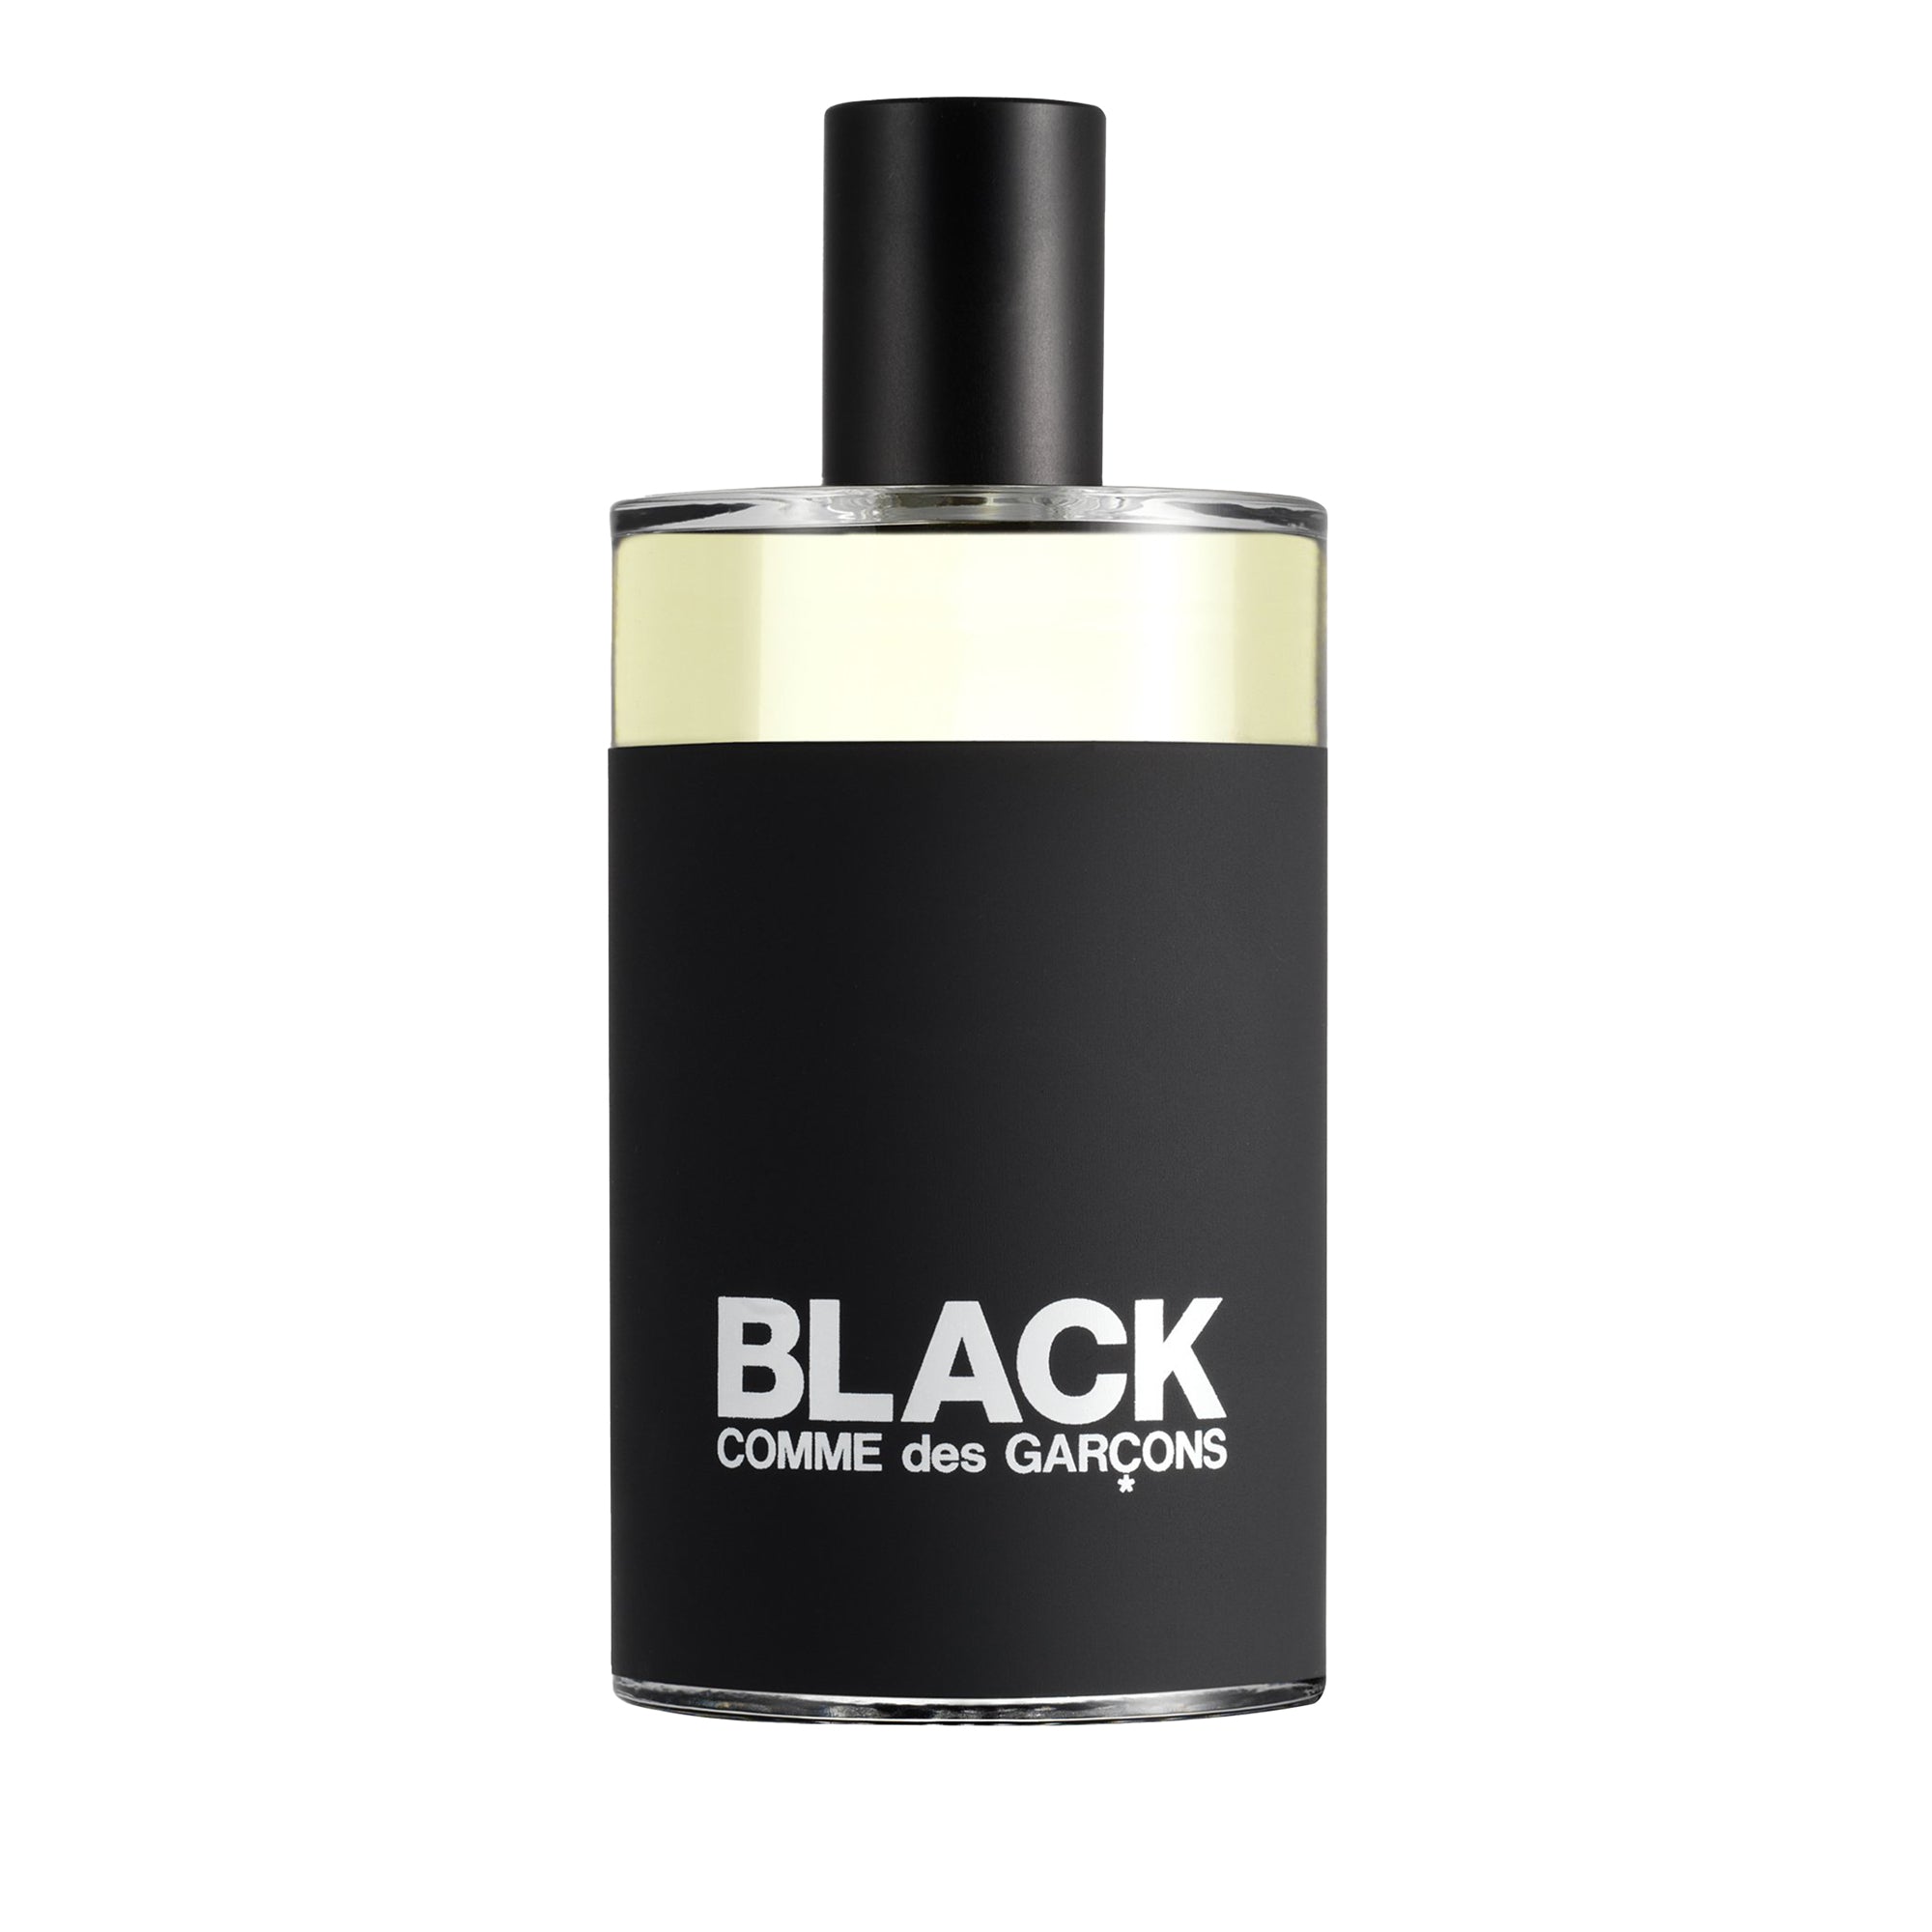 CDG PARFUM - BLACK Comme des Garçons - (100ml natural spray) view 1